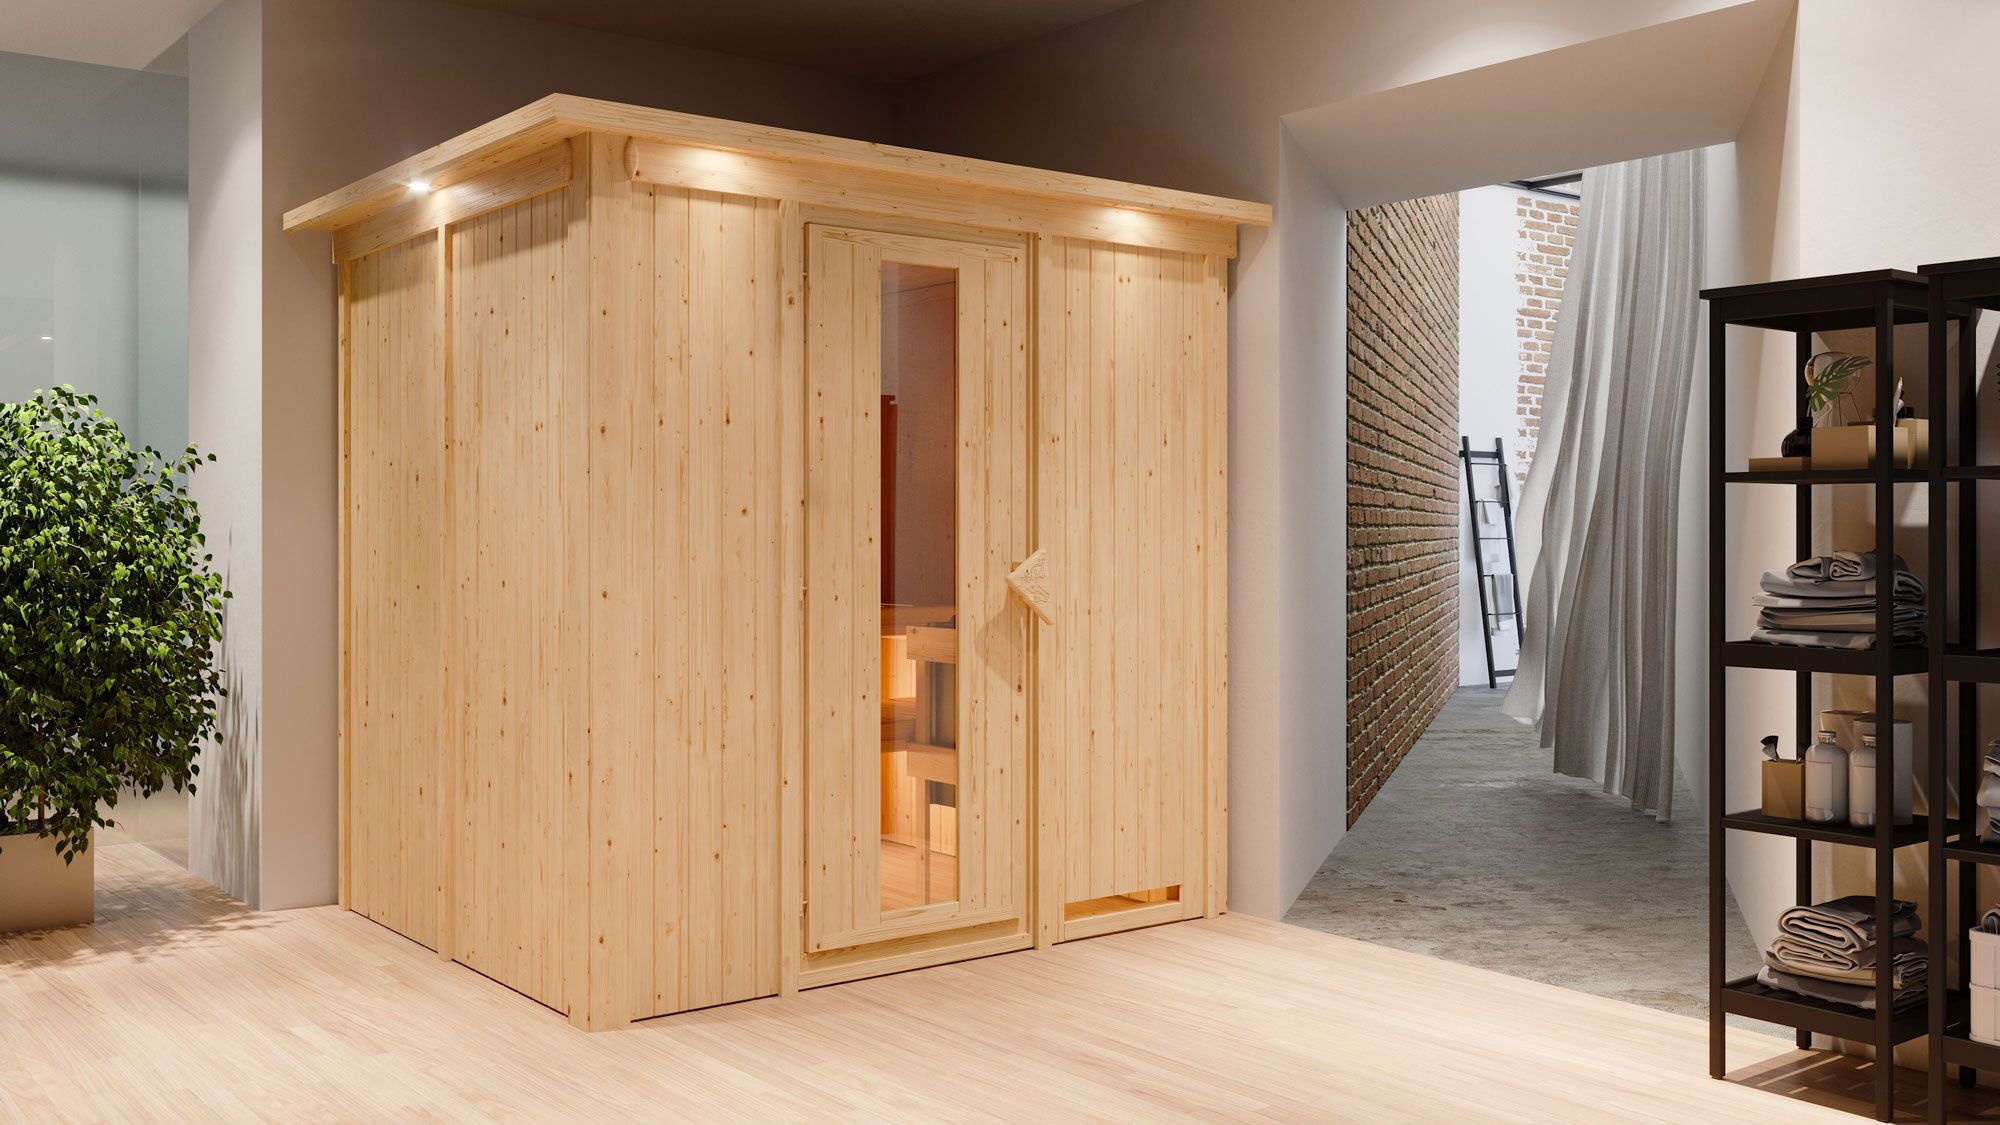 SET-sauna "Eemil" met energiebesparende deur en rand - kleur: naturel, BIO 9 kW kachel - 210 x 184 x 202 cm (B x D x H)